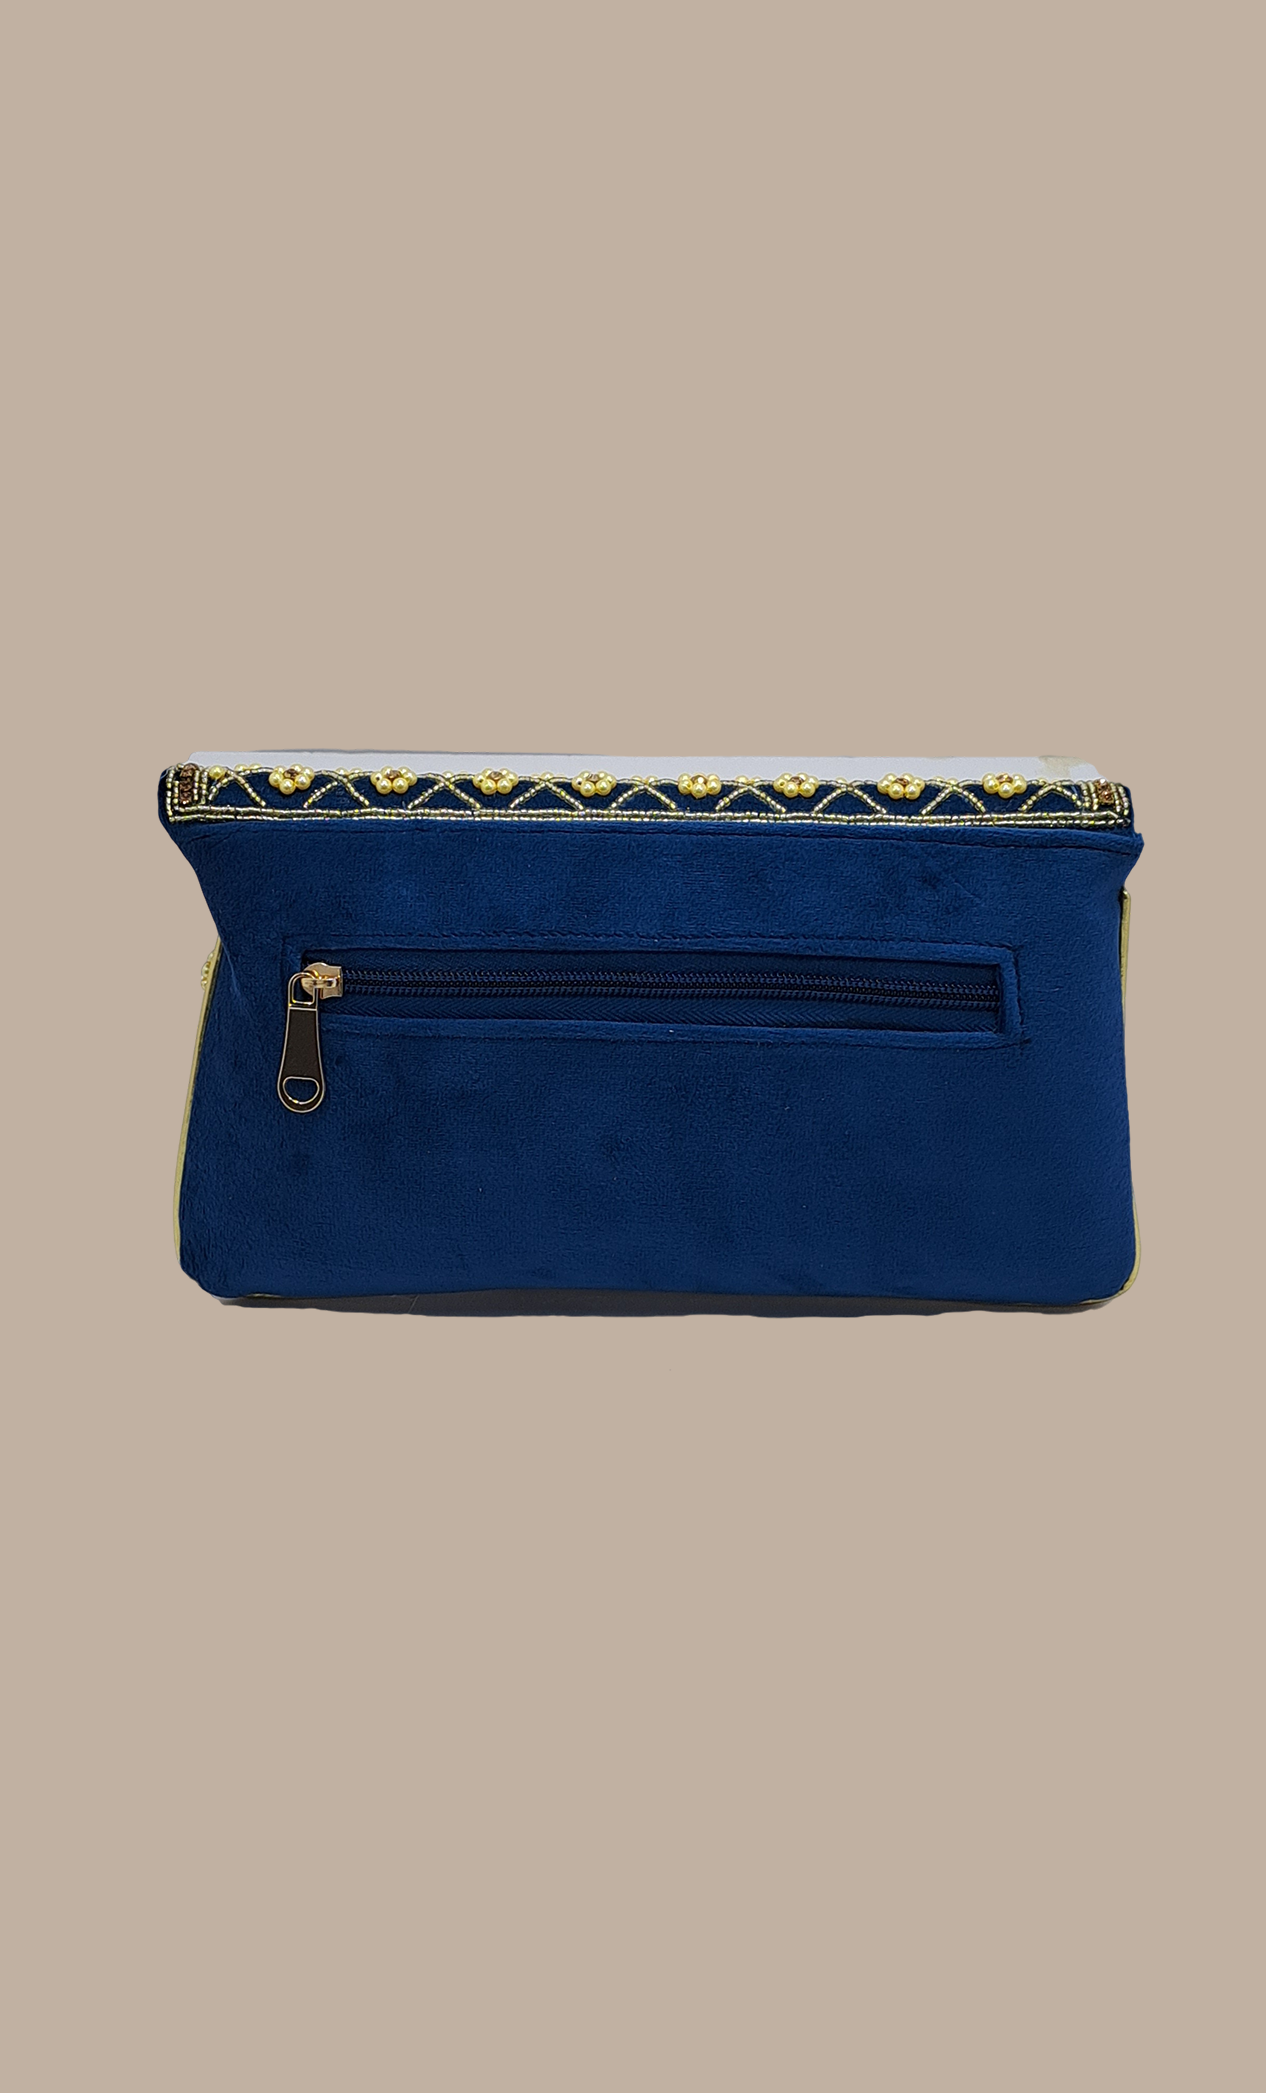 Teal Blue Pearl Embroidered Handbag